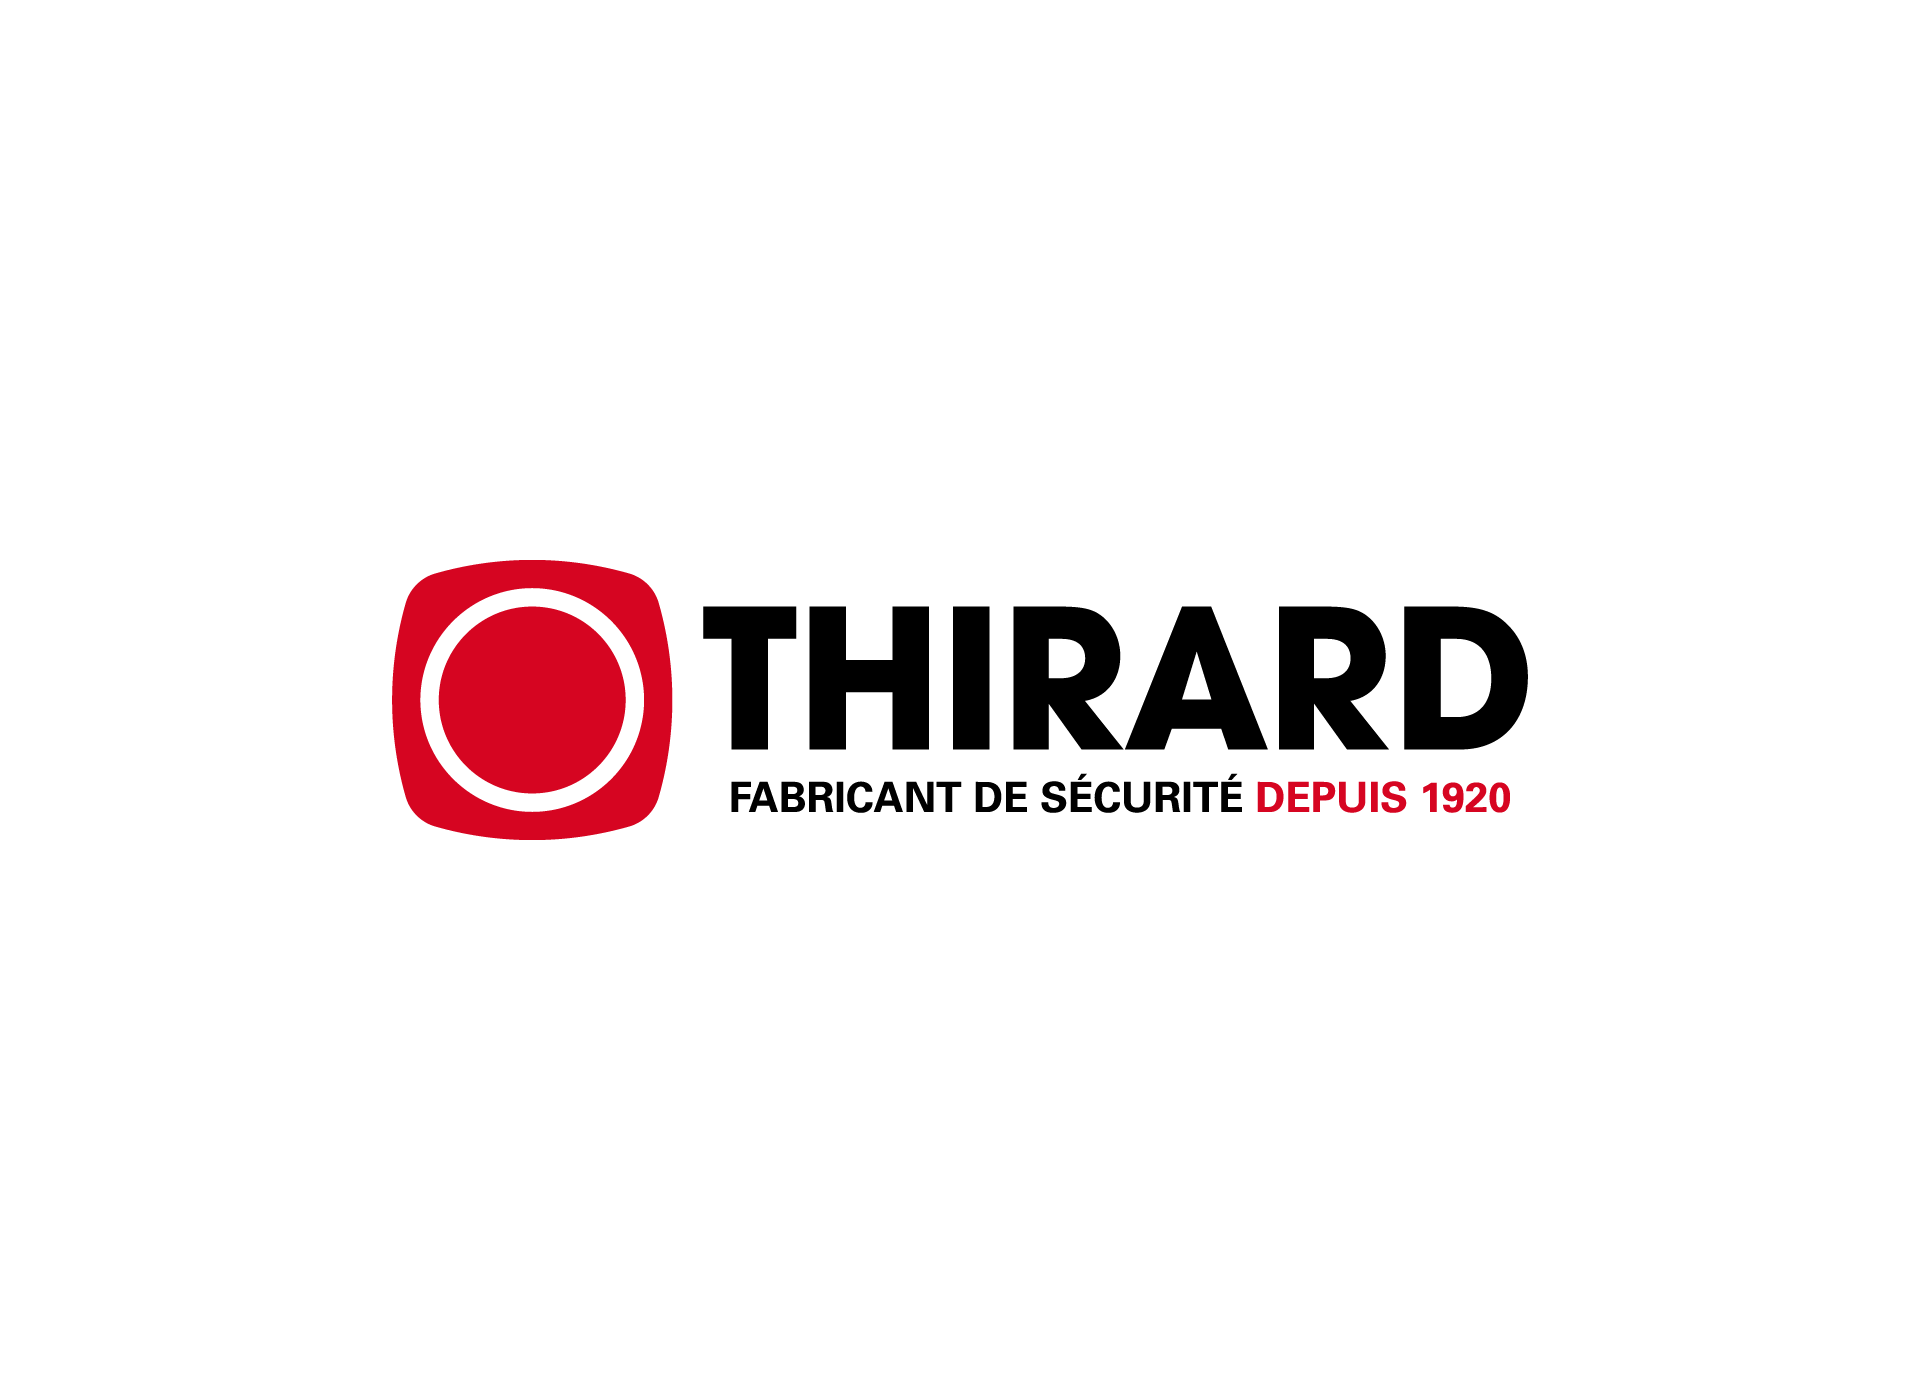 Thirard logo